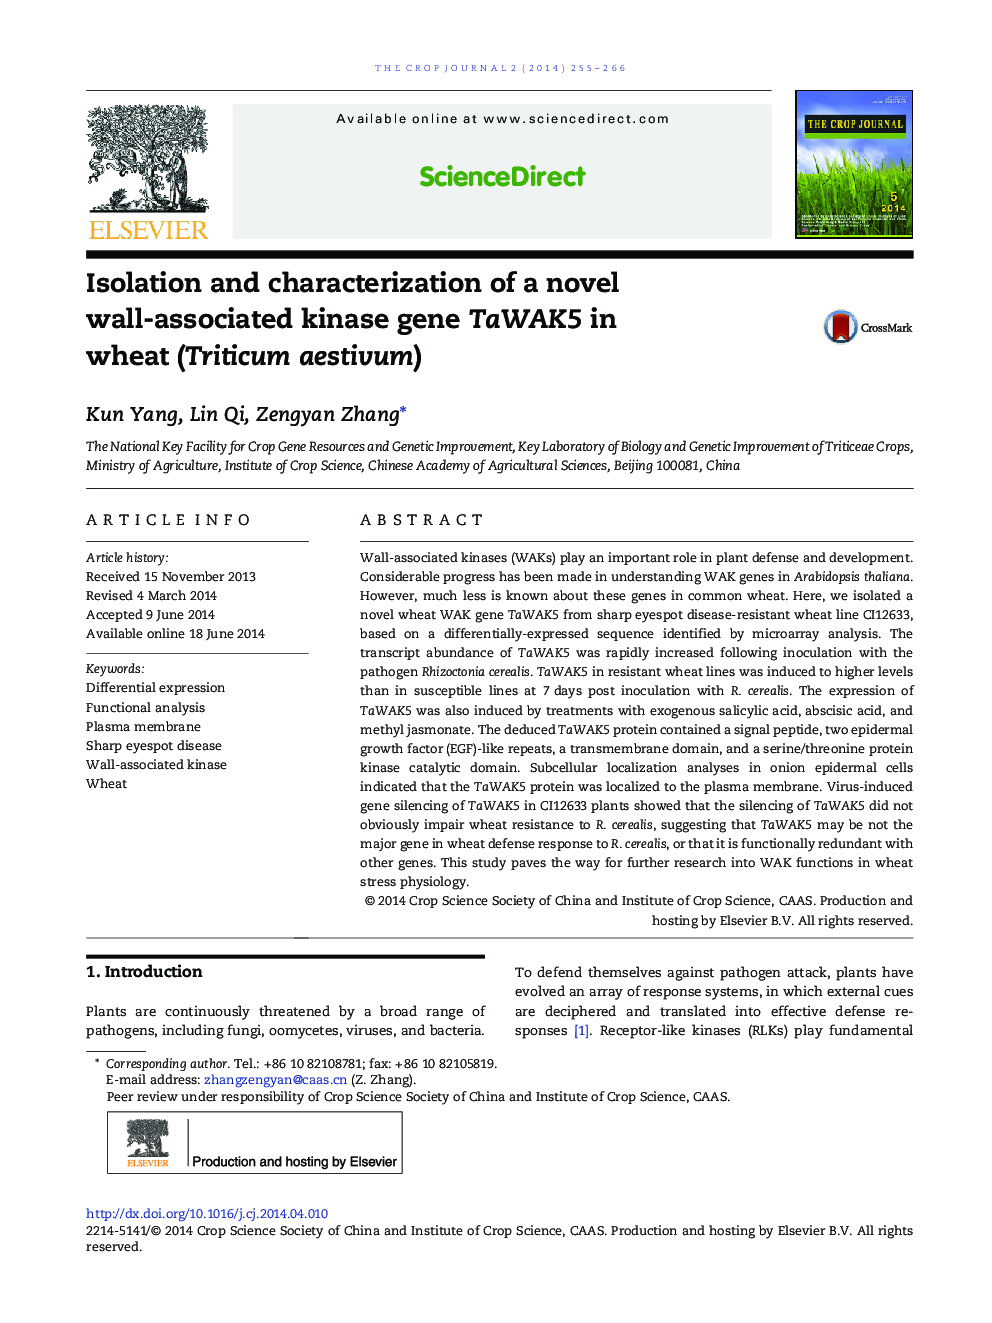 Isolation and characterization of a novel wall-associated kinase gene TaWAK5 in wheat (Triticum aestivum) 